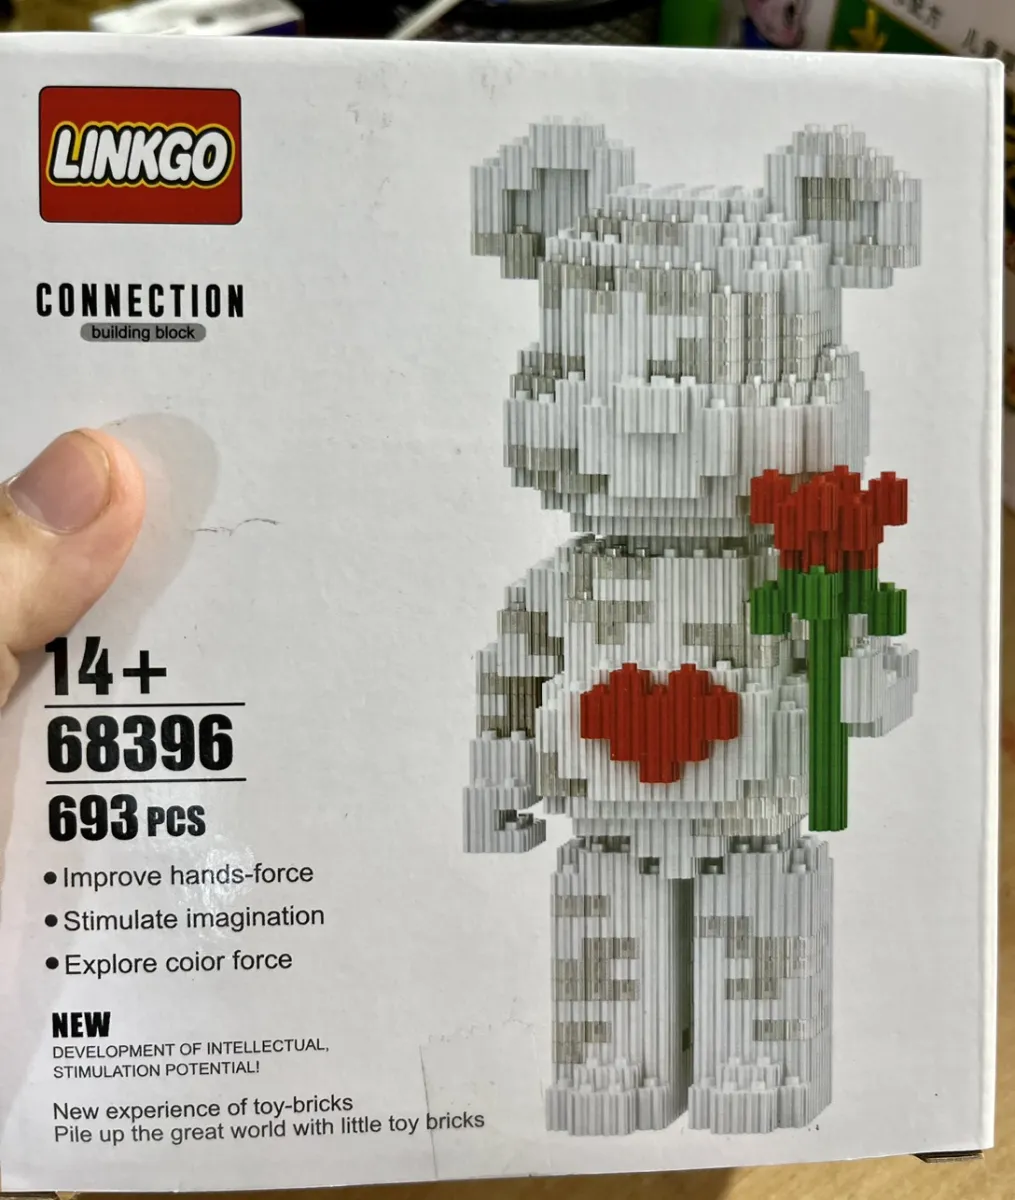 Sỉ ] Combo Sỉ 10 Hộp Lego Xếp Hình Lego GấU 3d Loại 19cm, Đồ ChơI ...